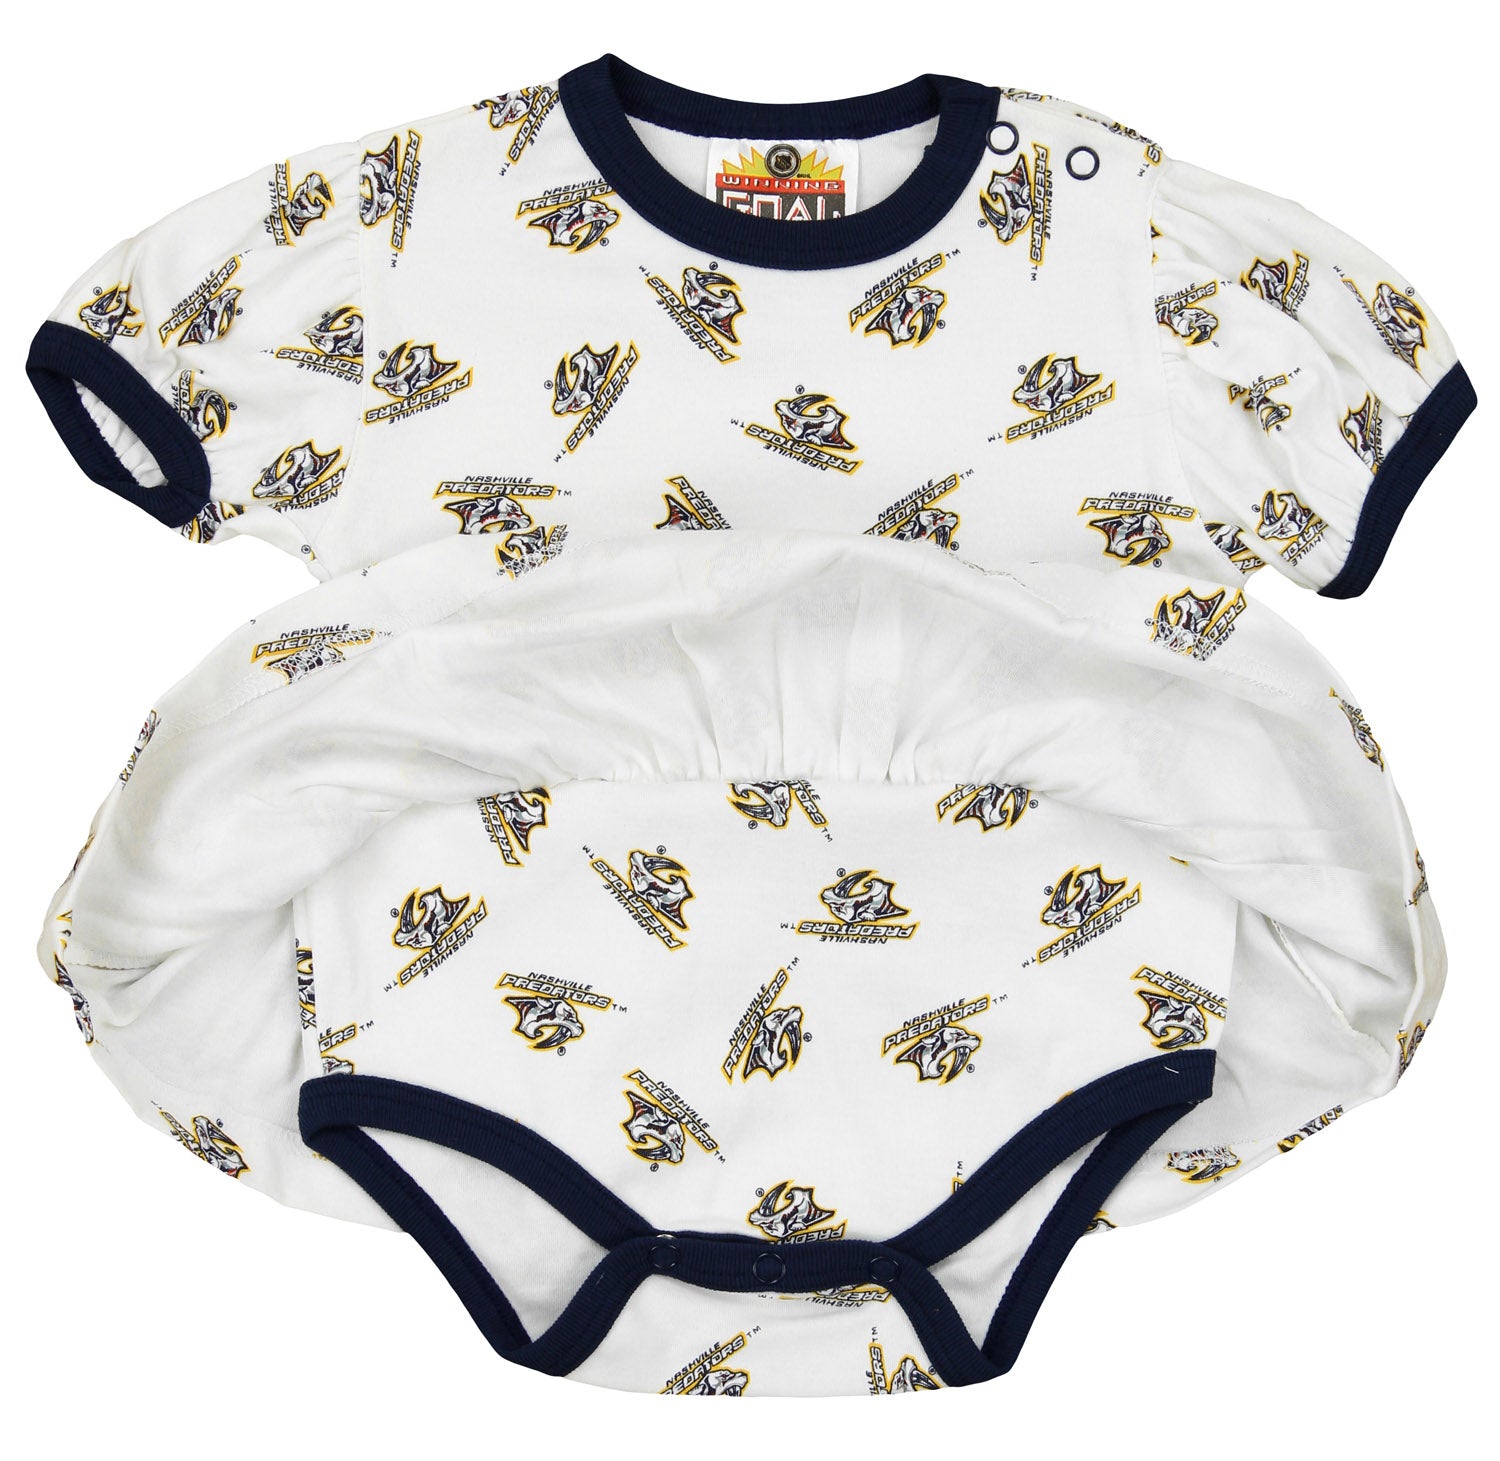 Nashville Predators Newborn & Infant Jersey Bodysuit - Gold